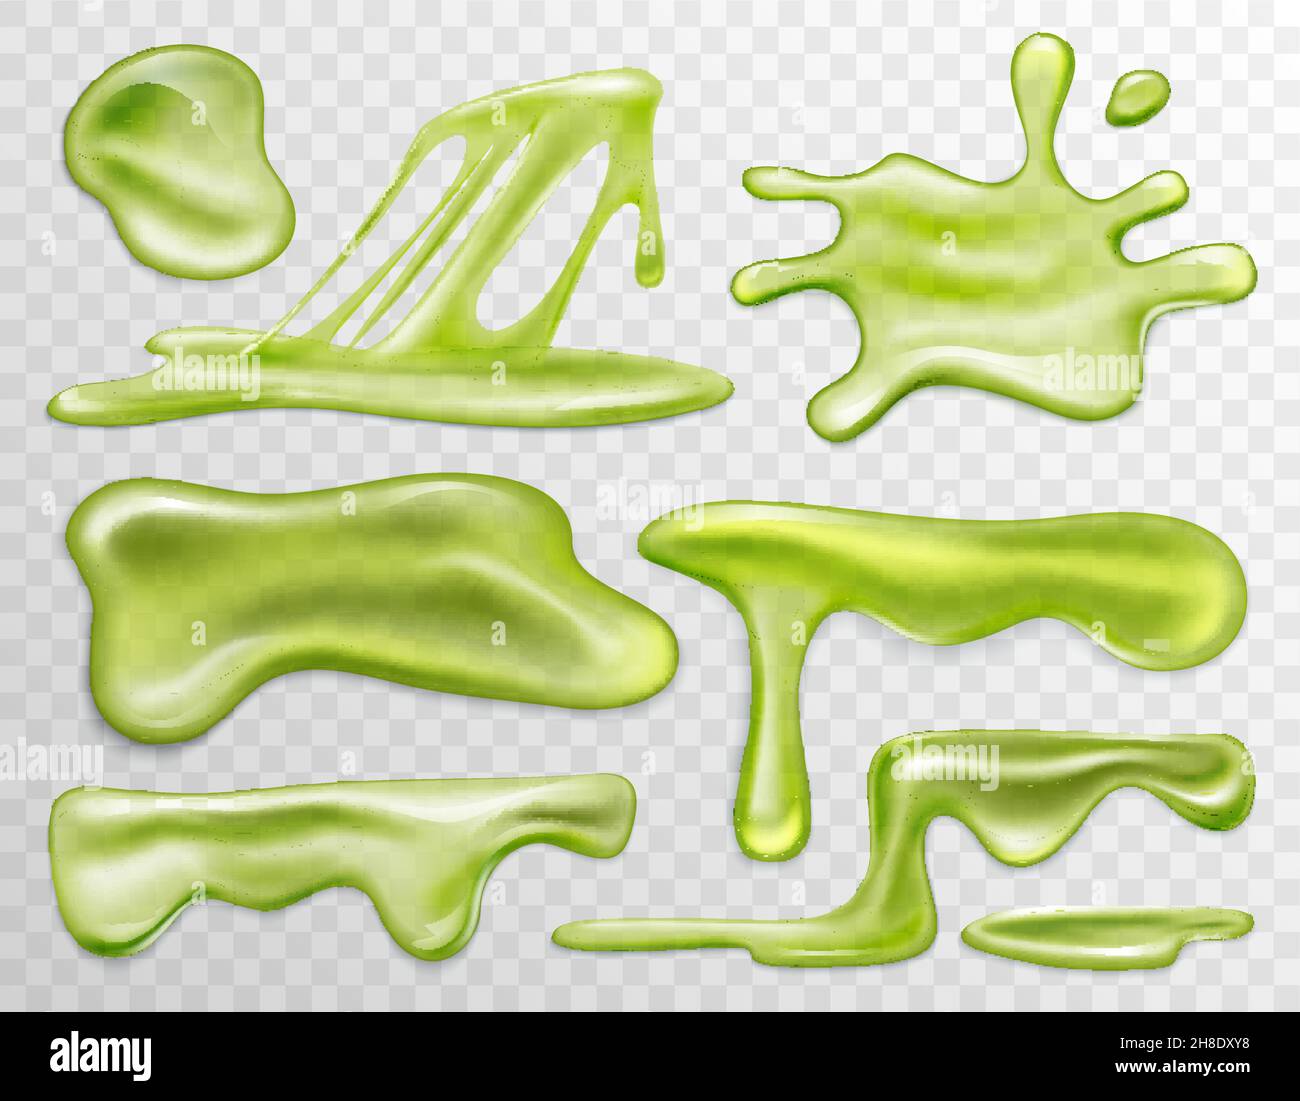 green slime splash on transparent background ,isolated slime